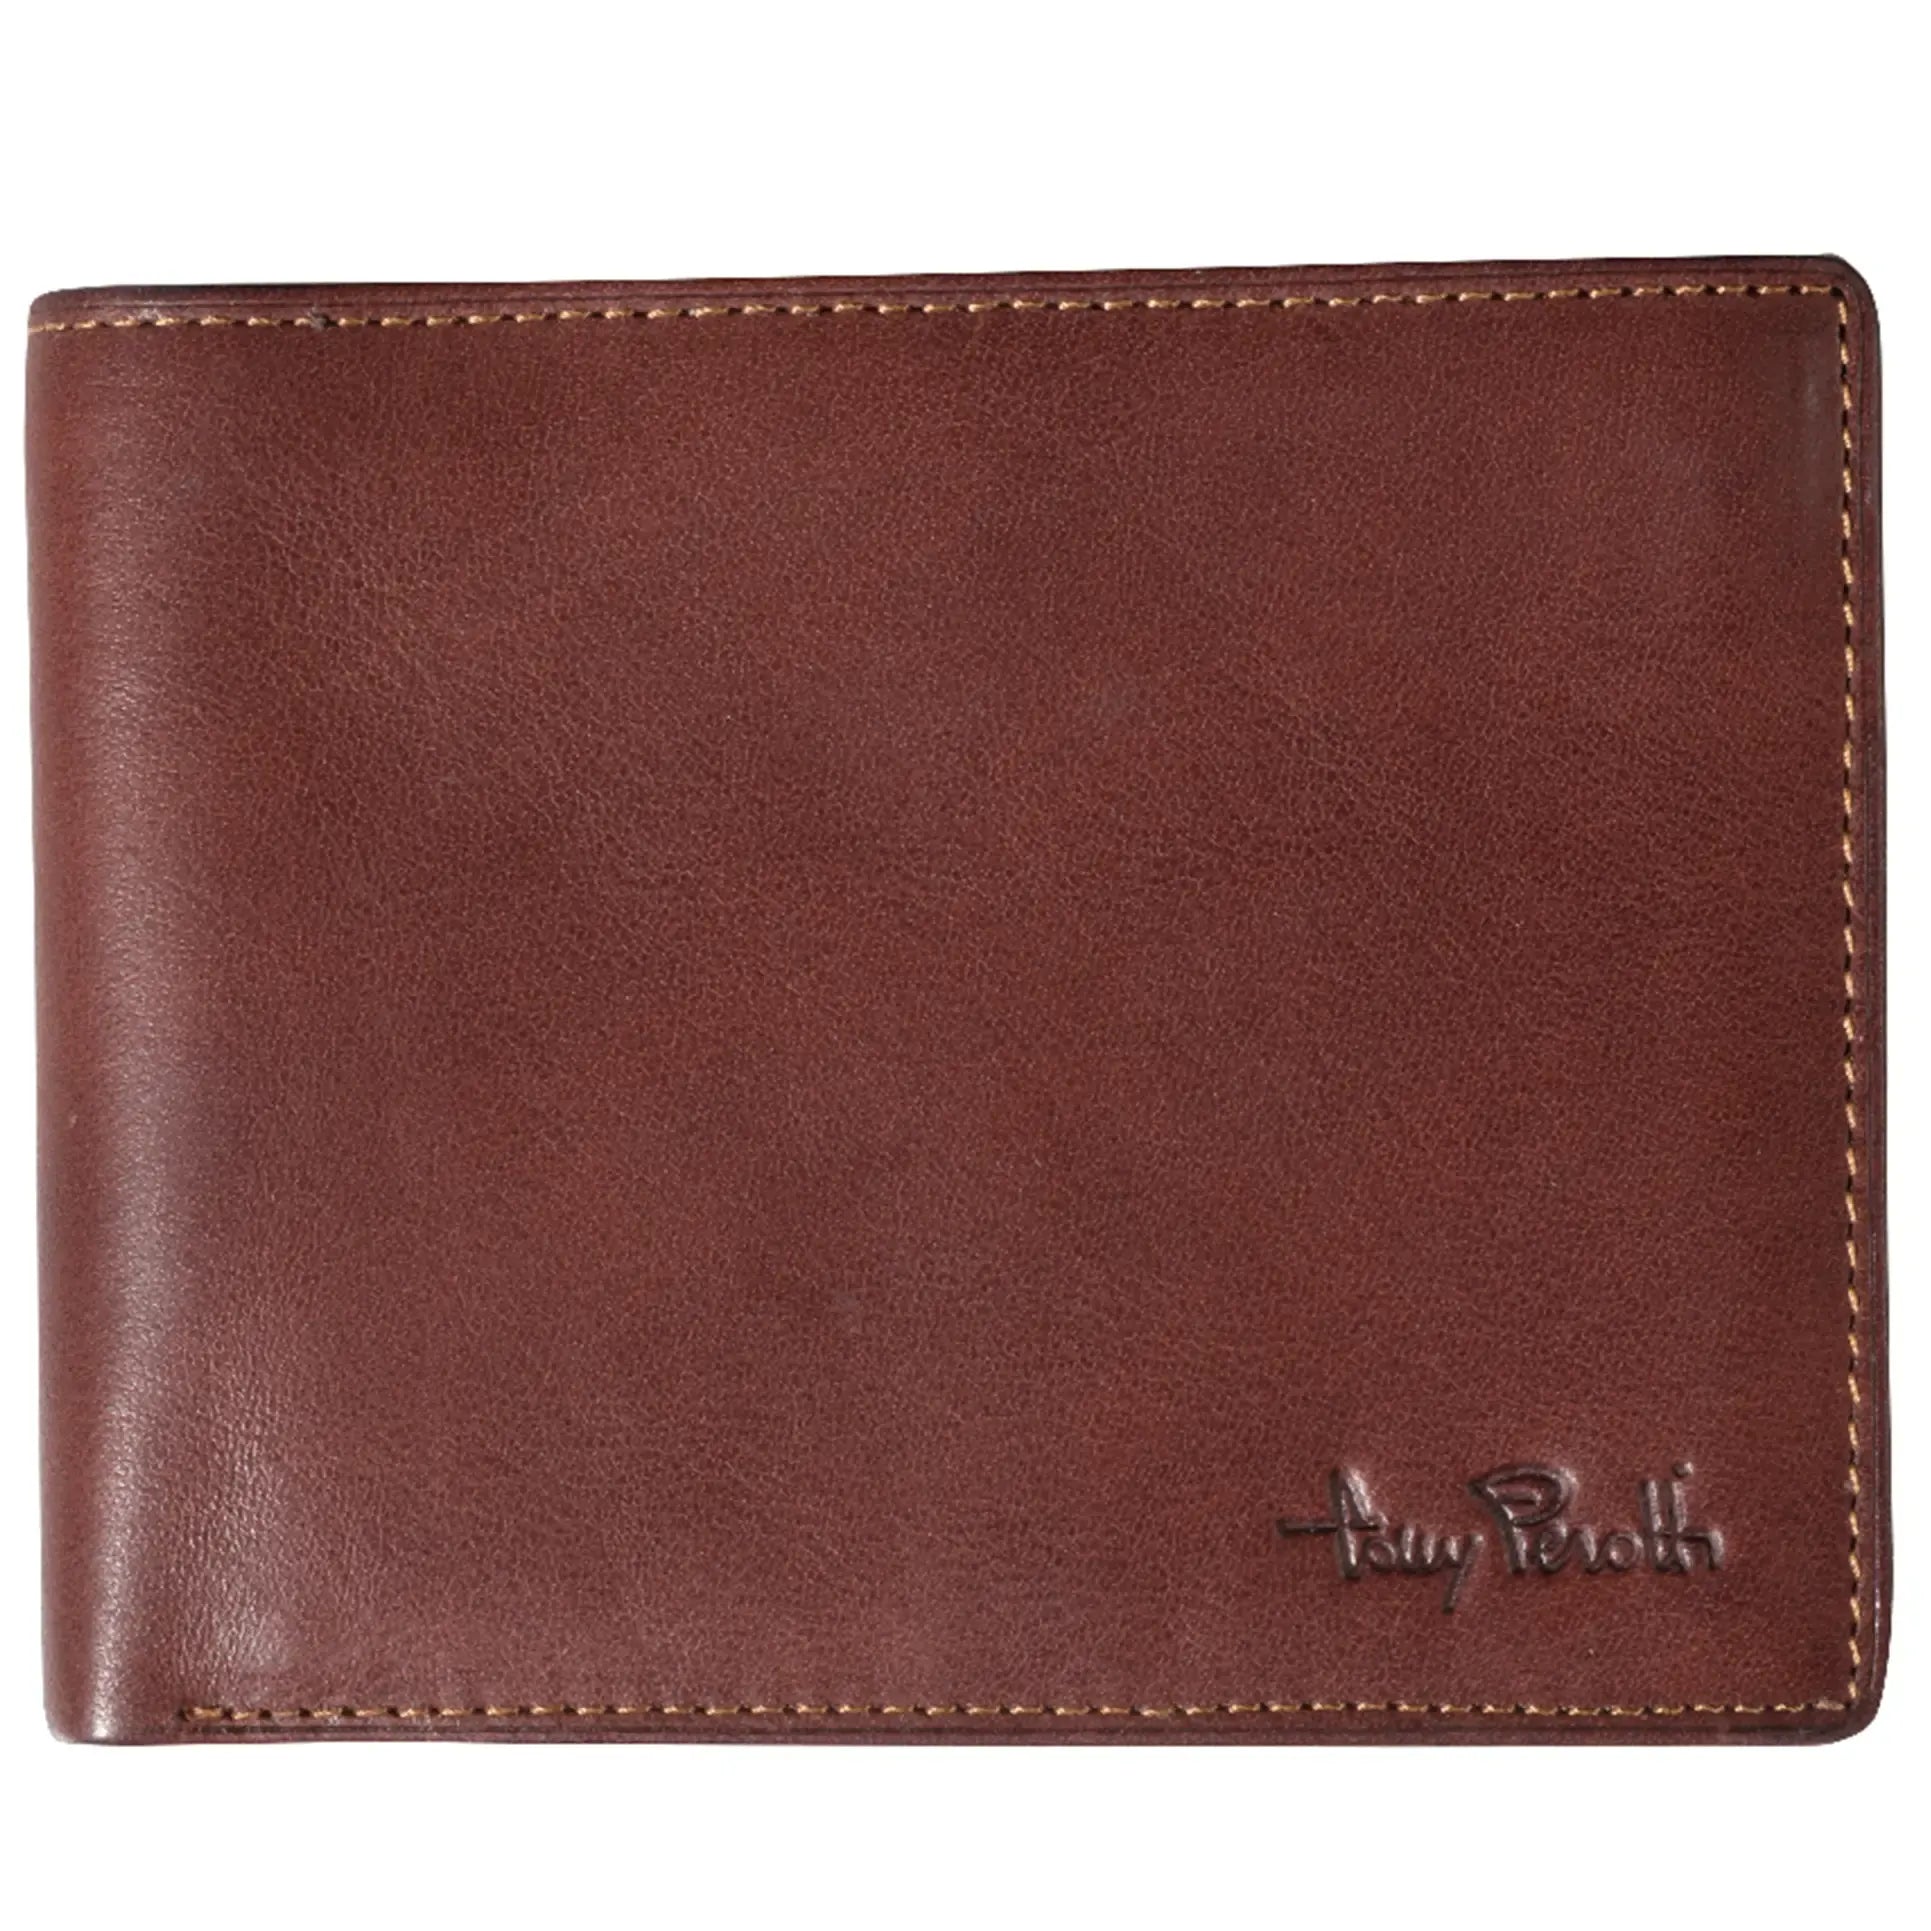 Tony Perotti Furbo wallet 12 cm - Dark brown